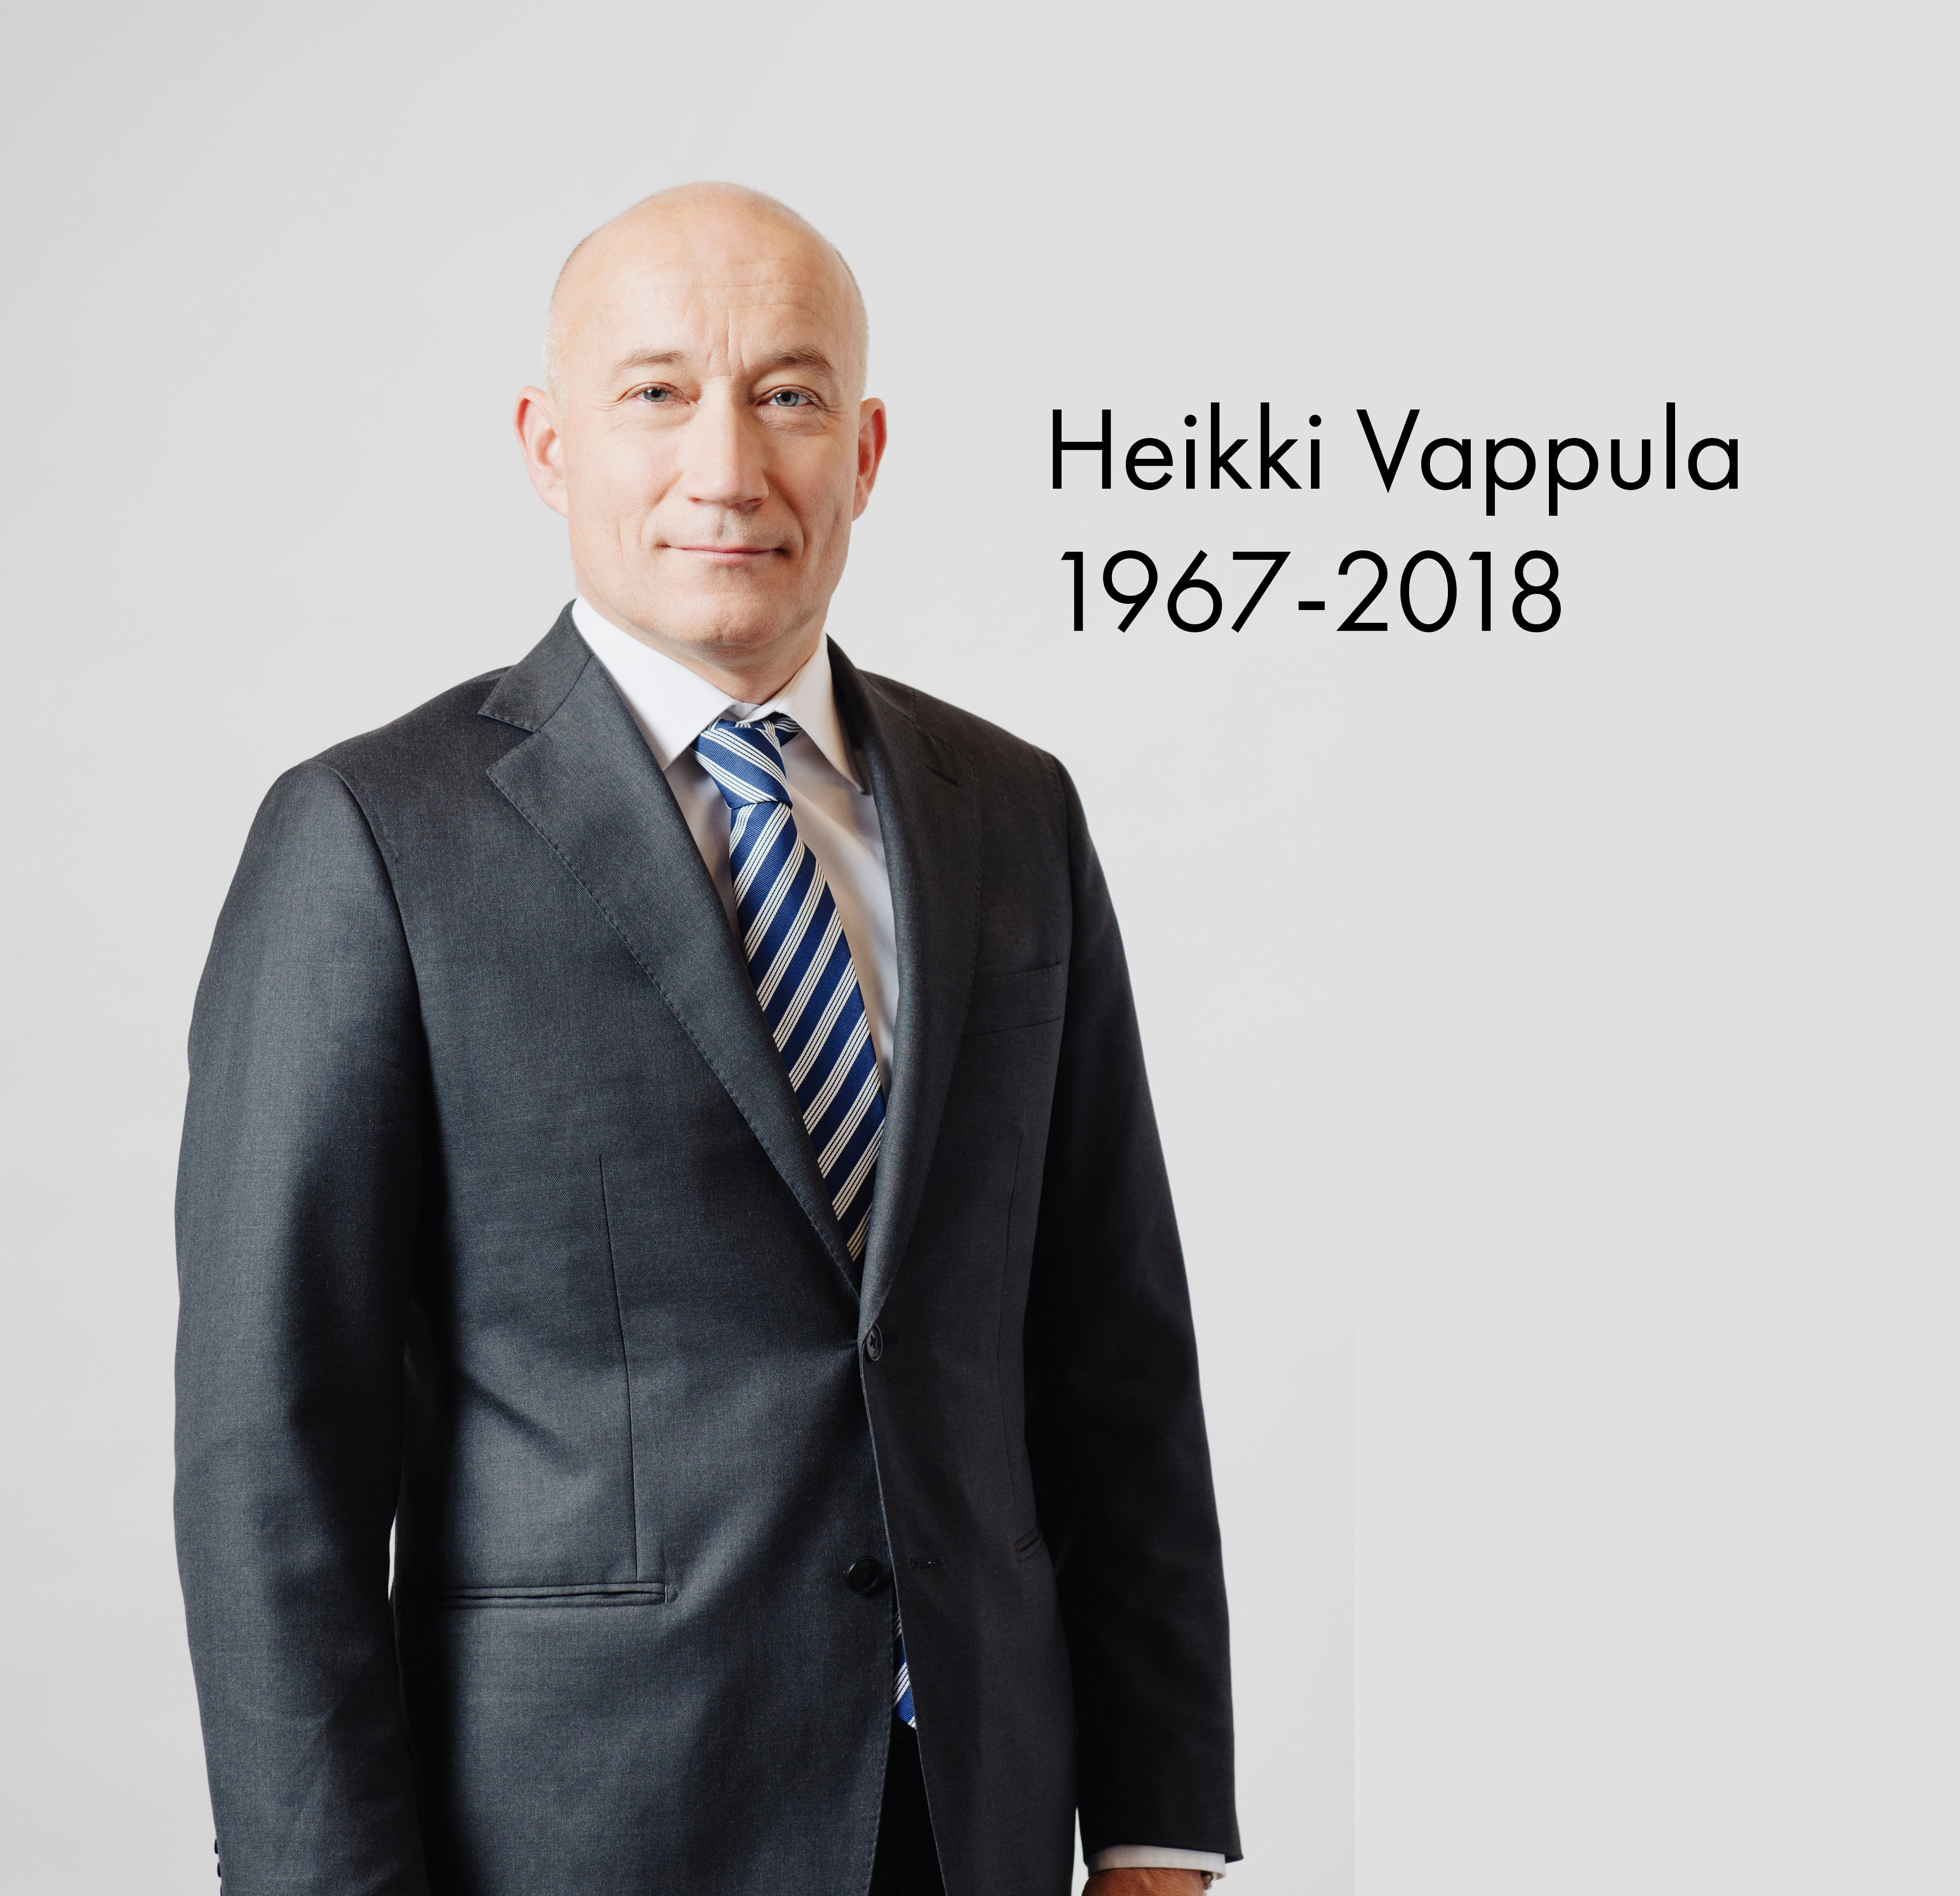 heikki-vappula-1967-2018.jpg